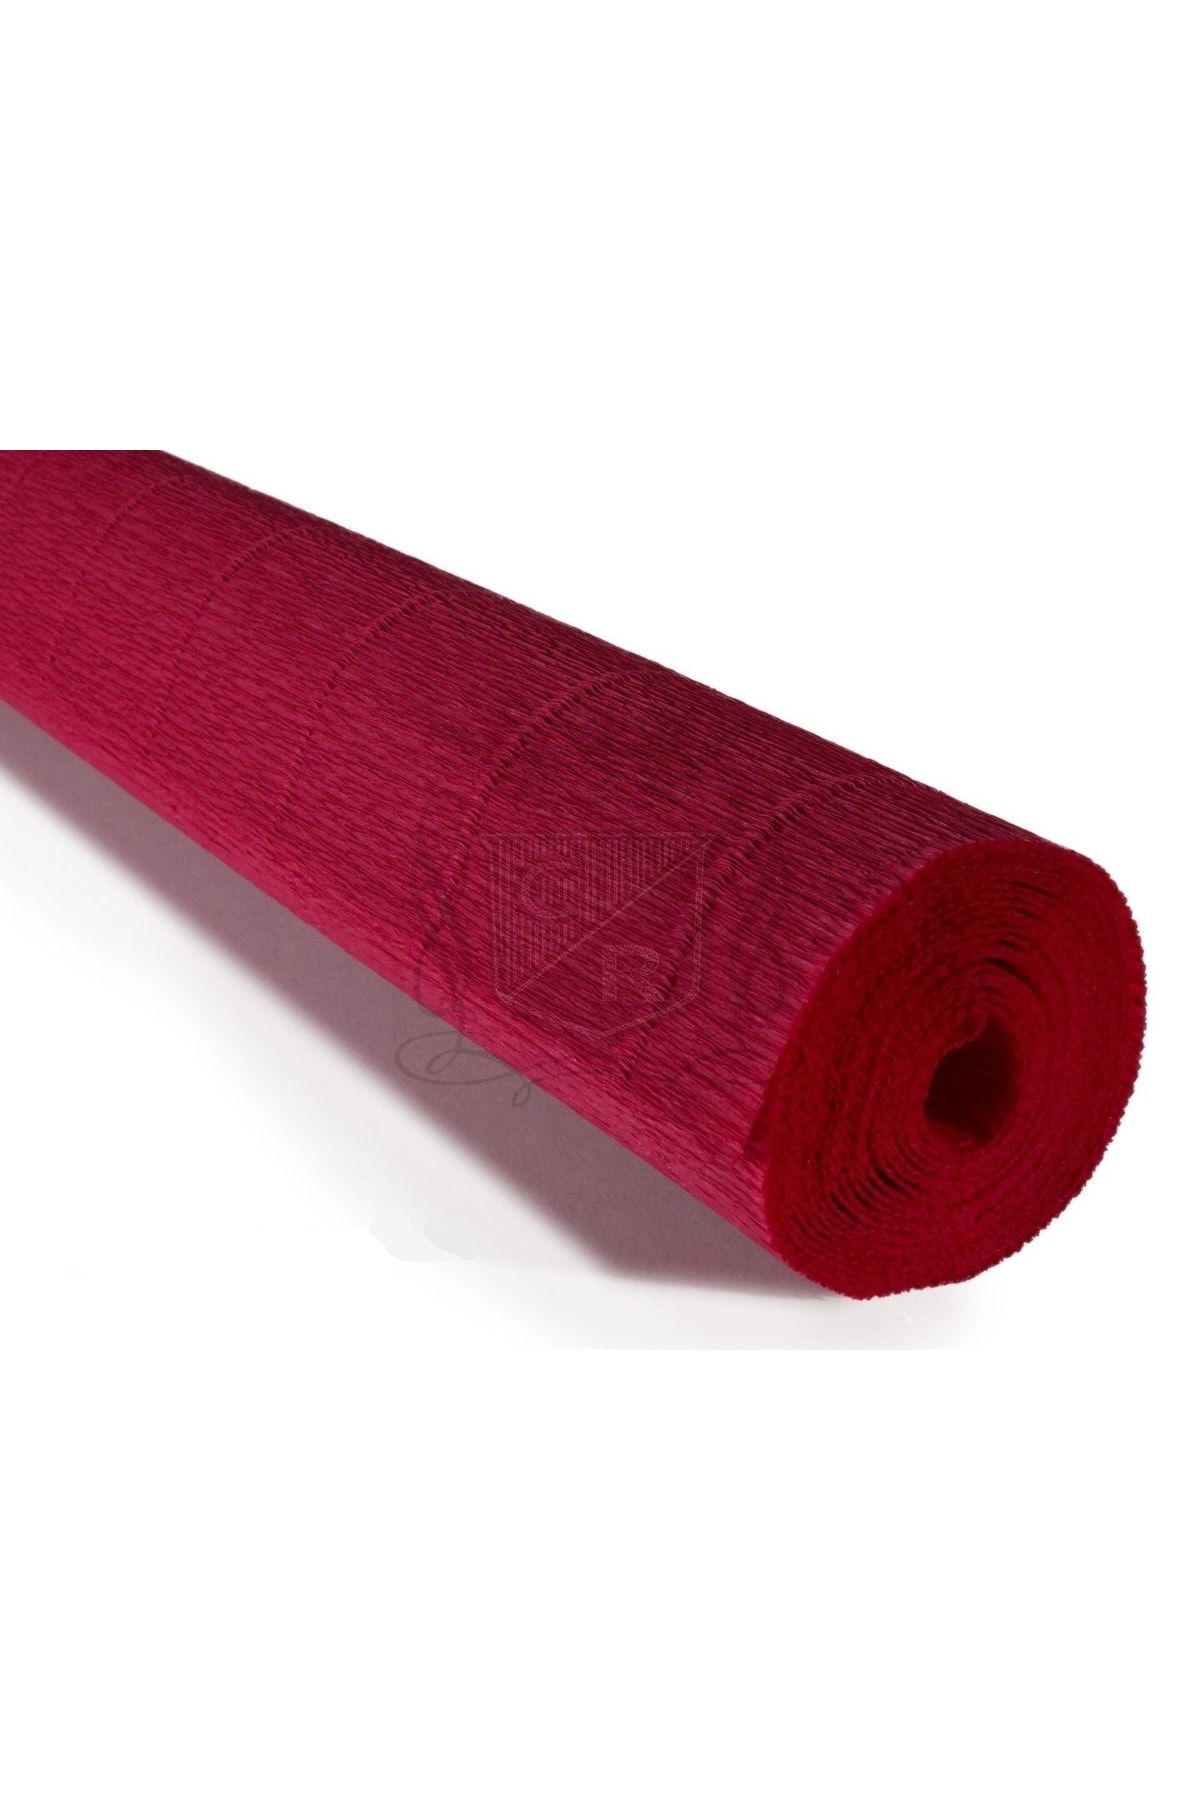 roco paper Italyan Krapon Kağıdı No:586 - Karmen Kırmızı - Red - 180 Gr. 50x250 Cm